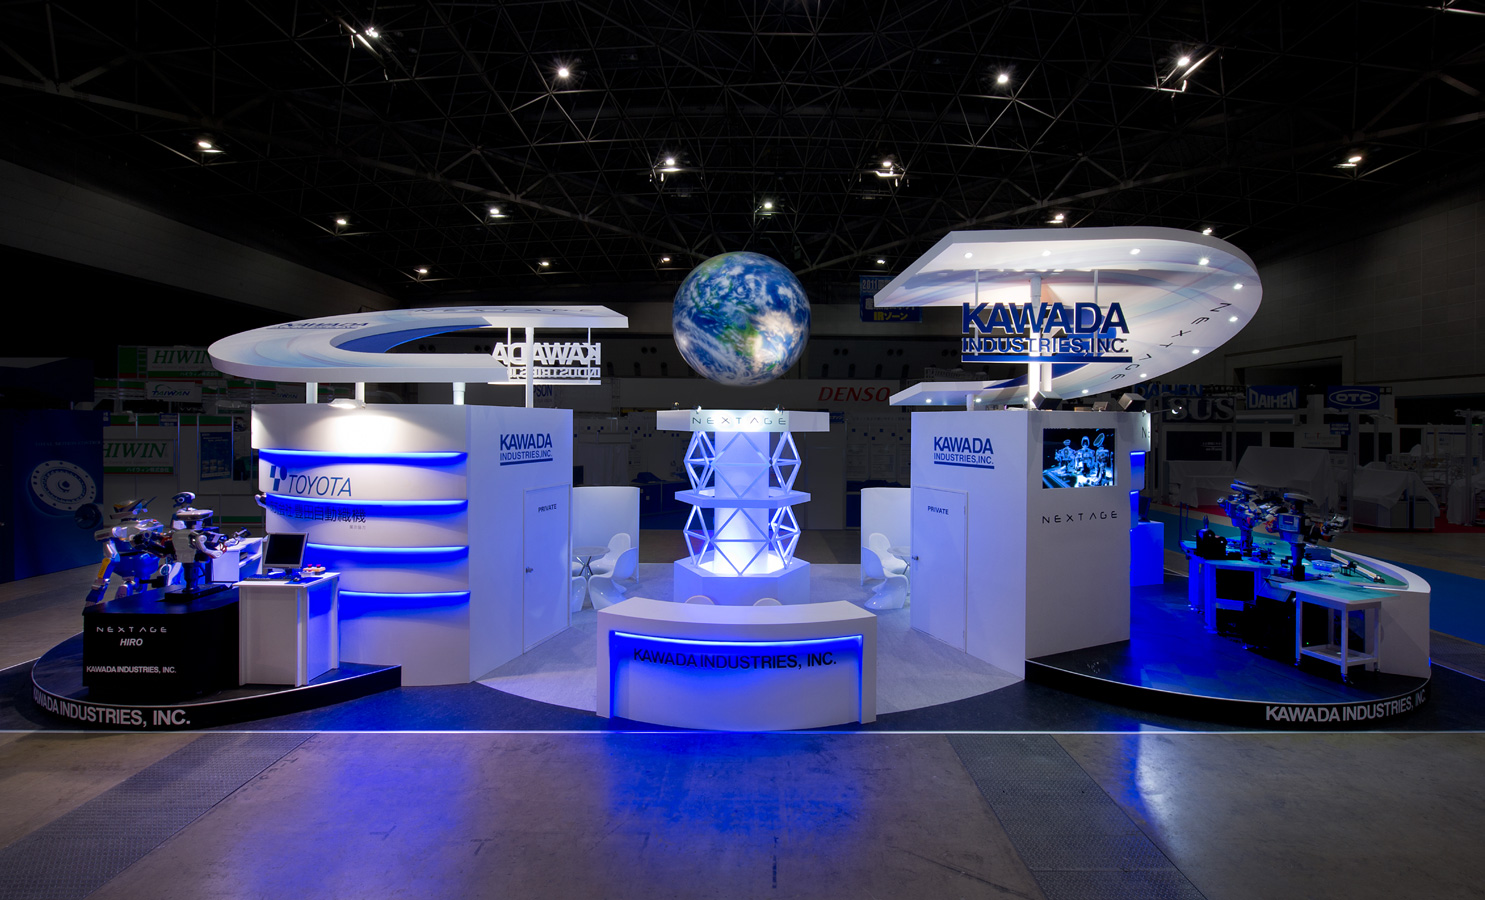 2011 International Robot Exhibition / Kawada Industries Co., Ltd. booth